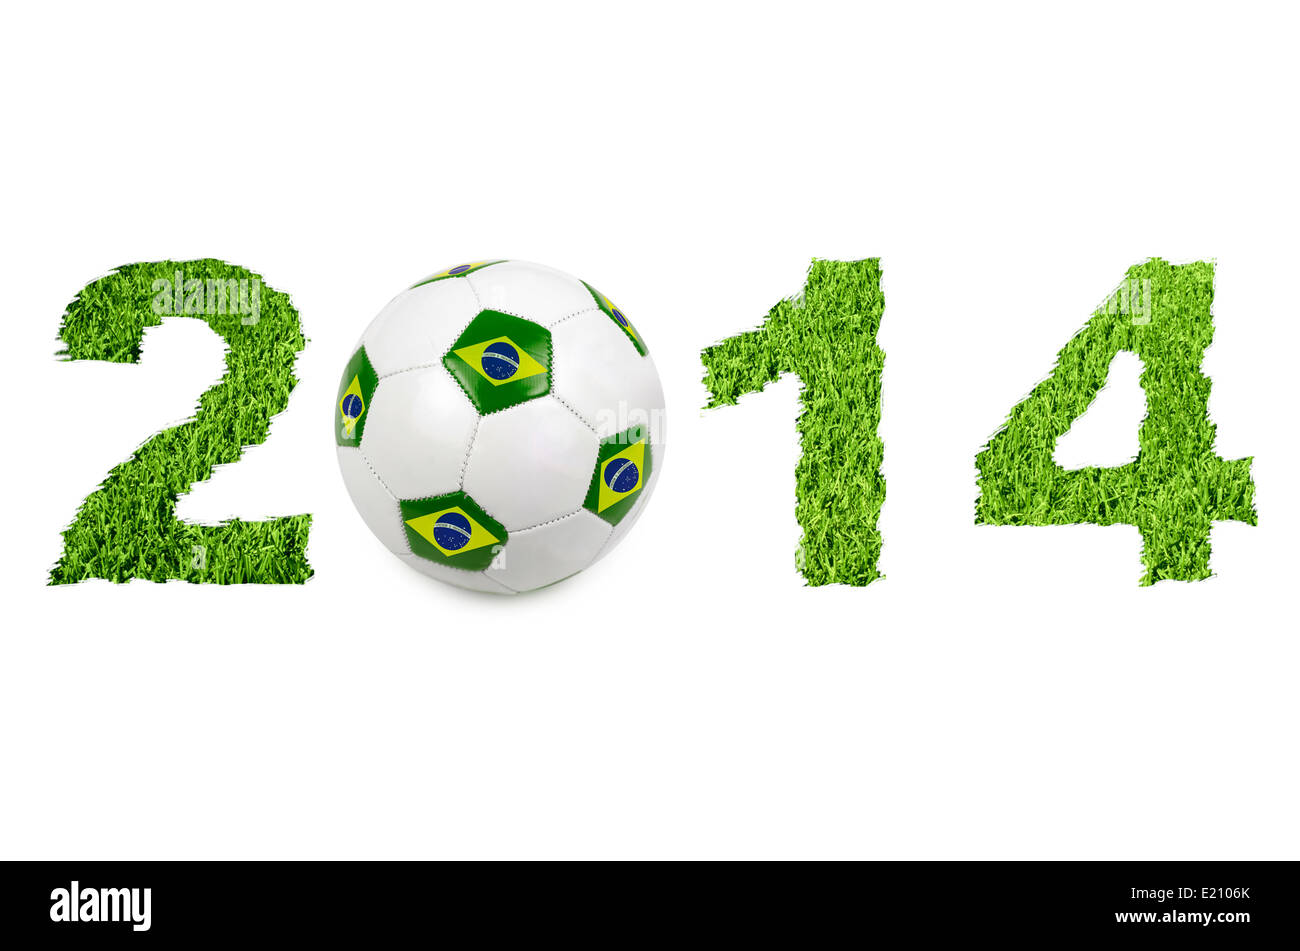 2014 soccer ball Stock Photo